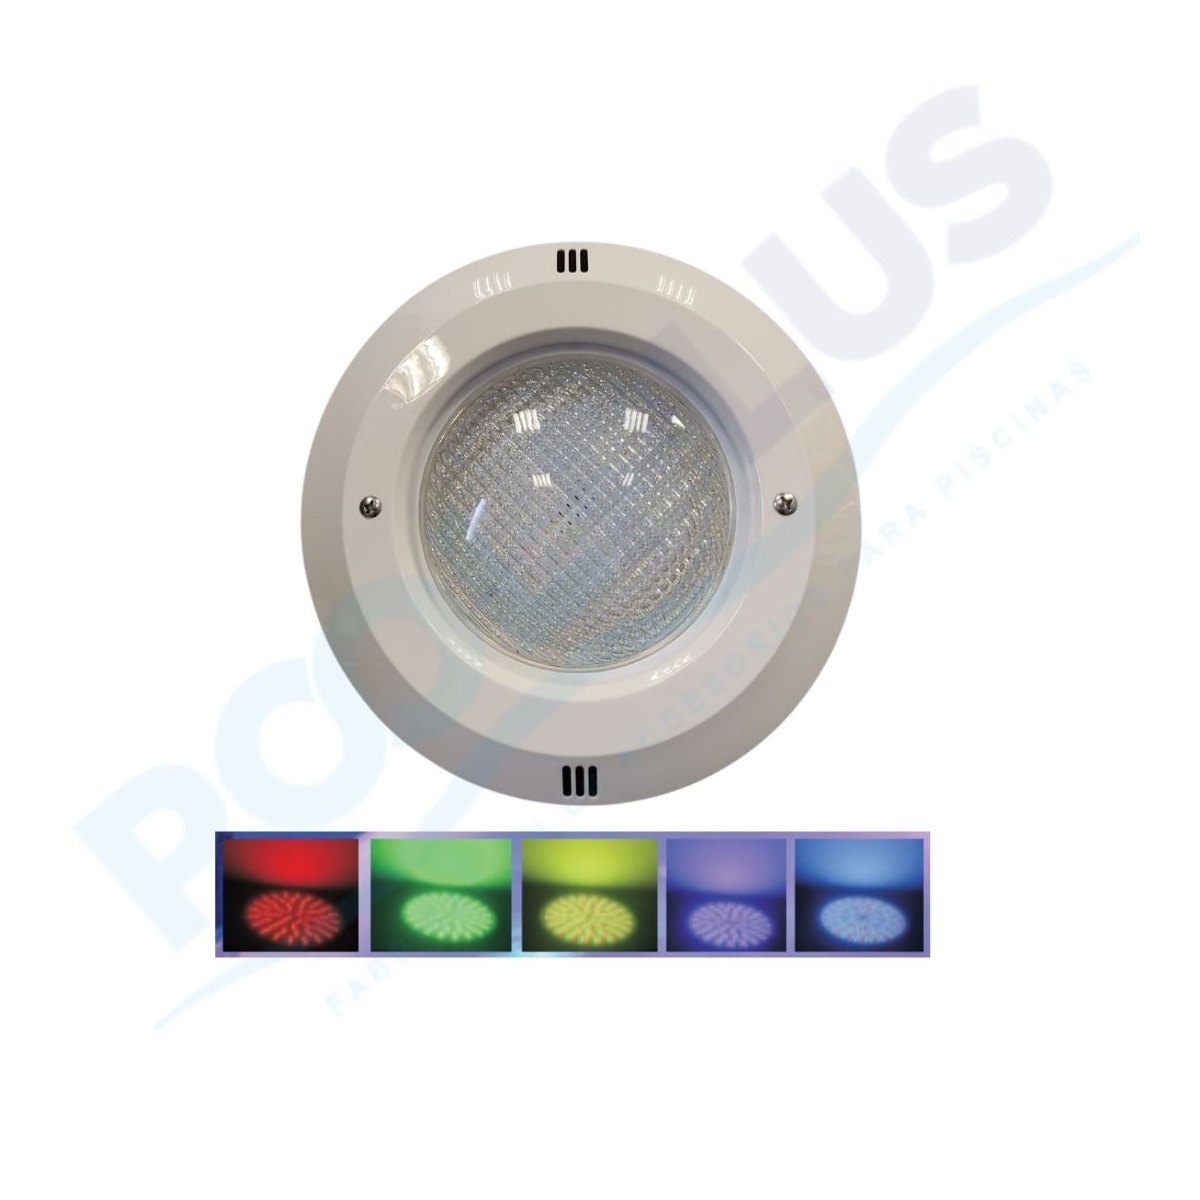 12 St par-56/par56 farbfolien filtros de color 21 x 21cm-libre selector de color-nuevo 